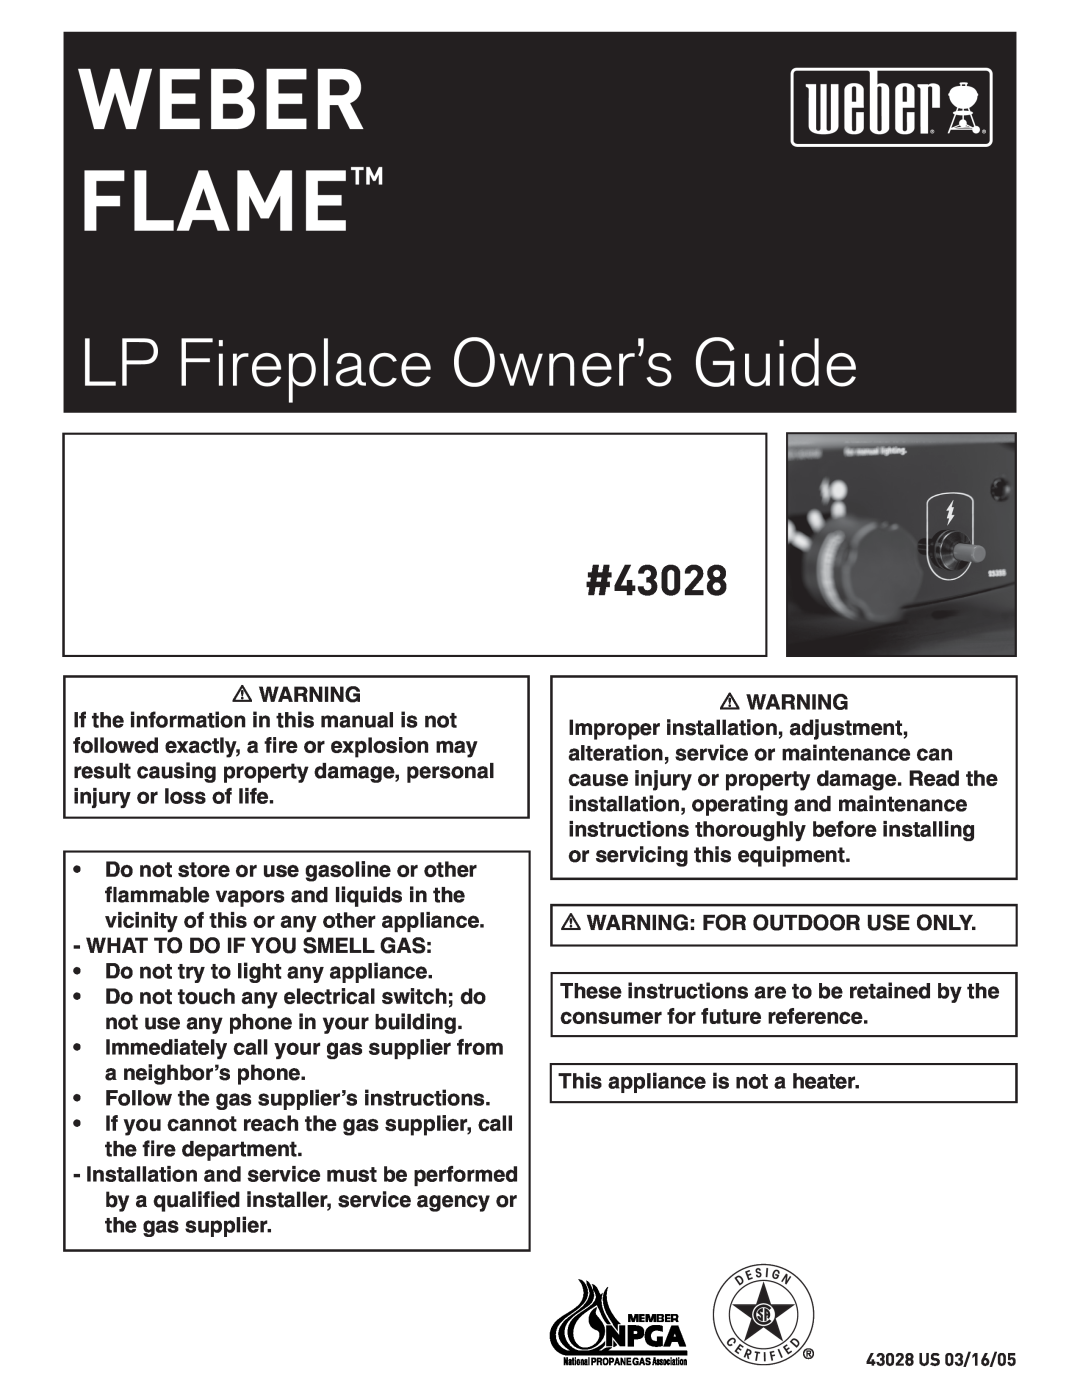 Weber #43028 manual Weber Flametm, LP Fireplace Owner’s Guide 